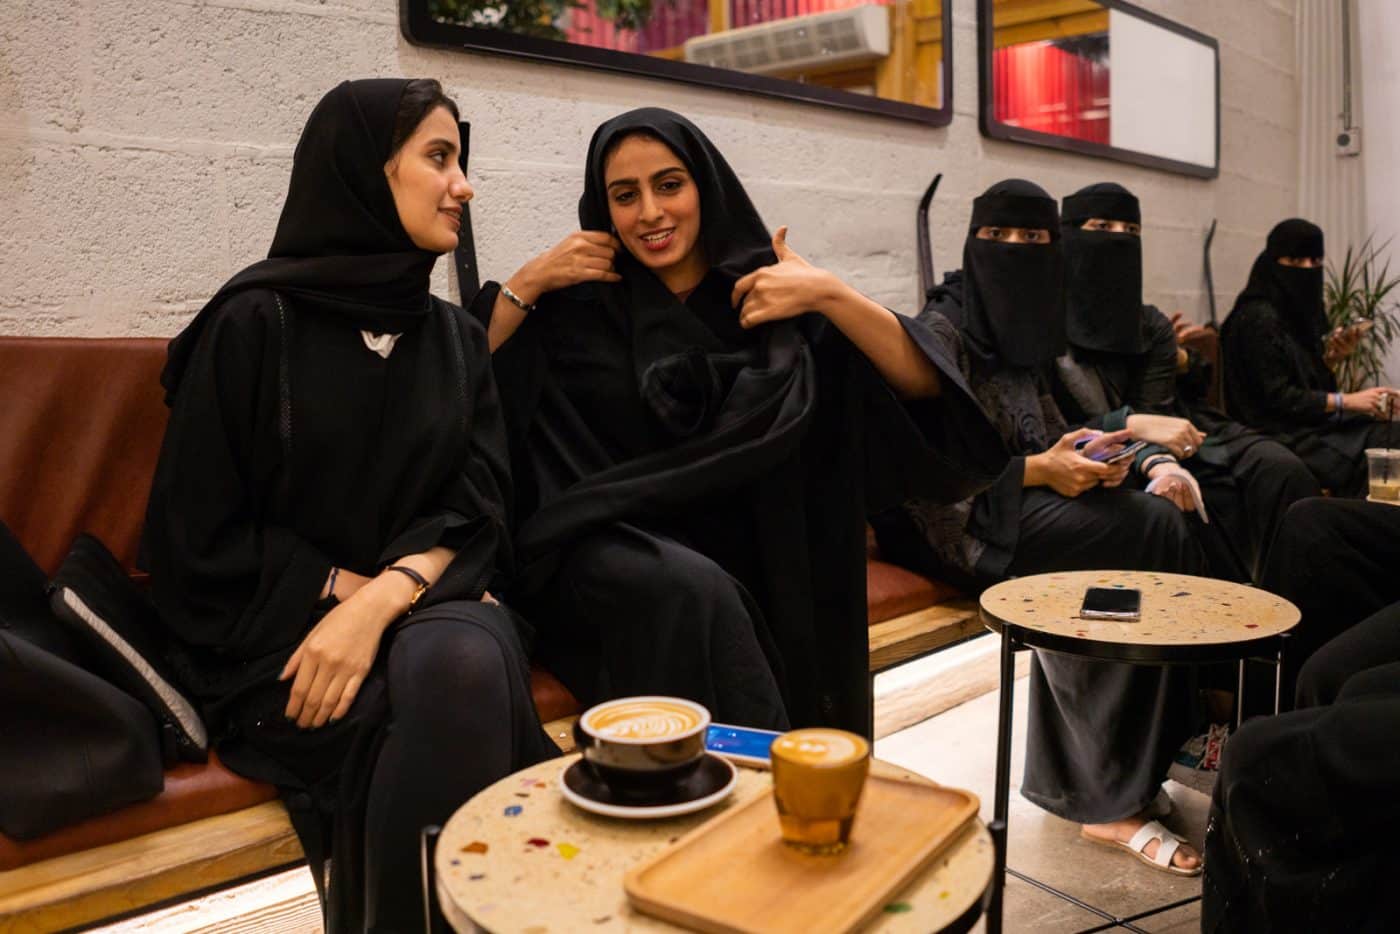 female tourist saudi arabia